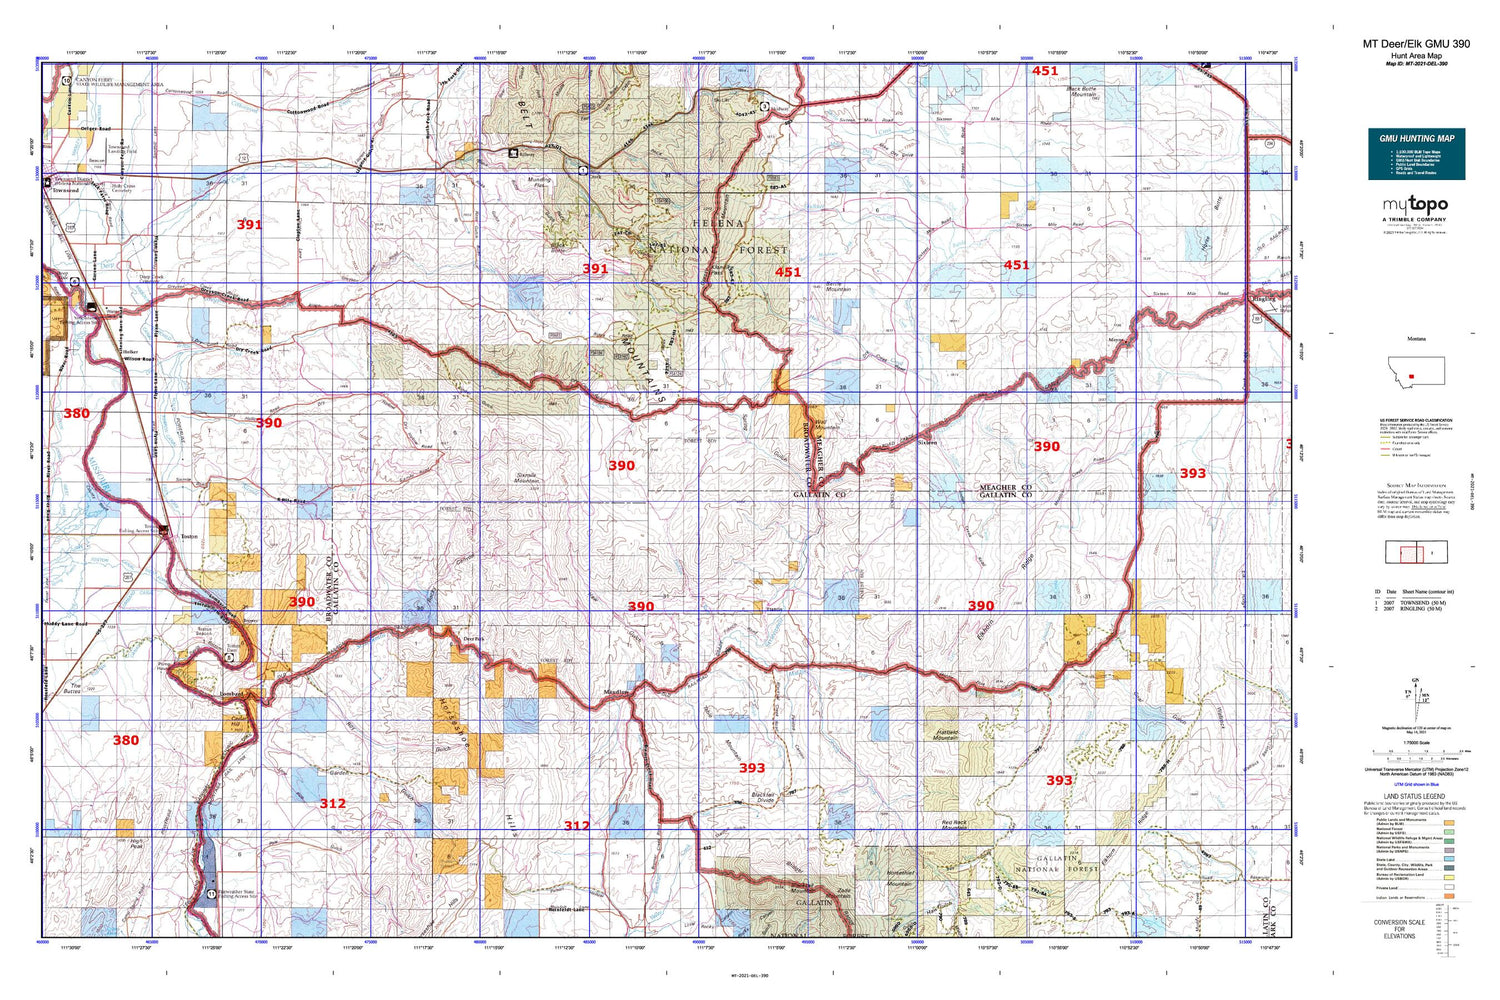 Montana Deer/Elk GMU 390 Map Image